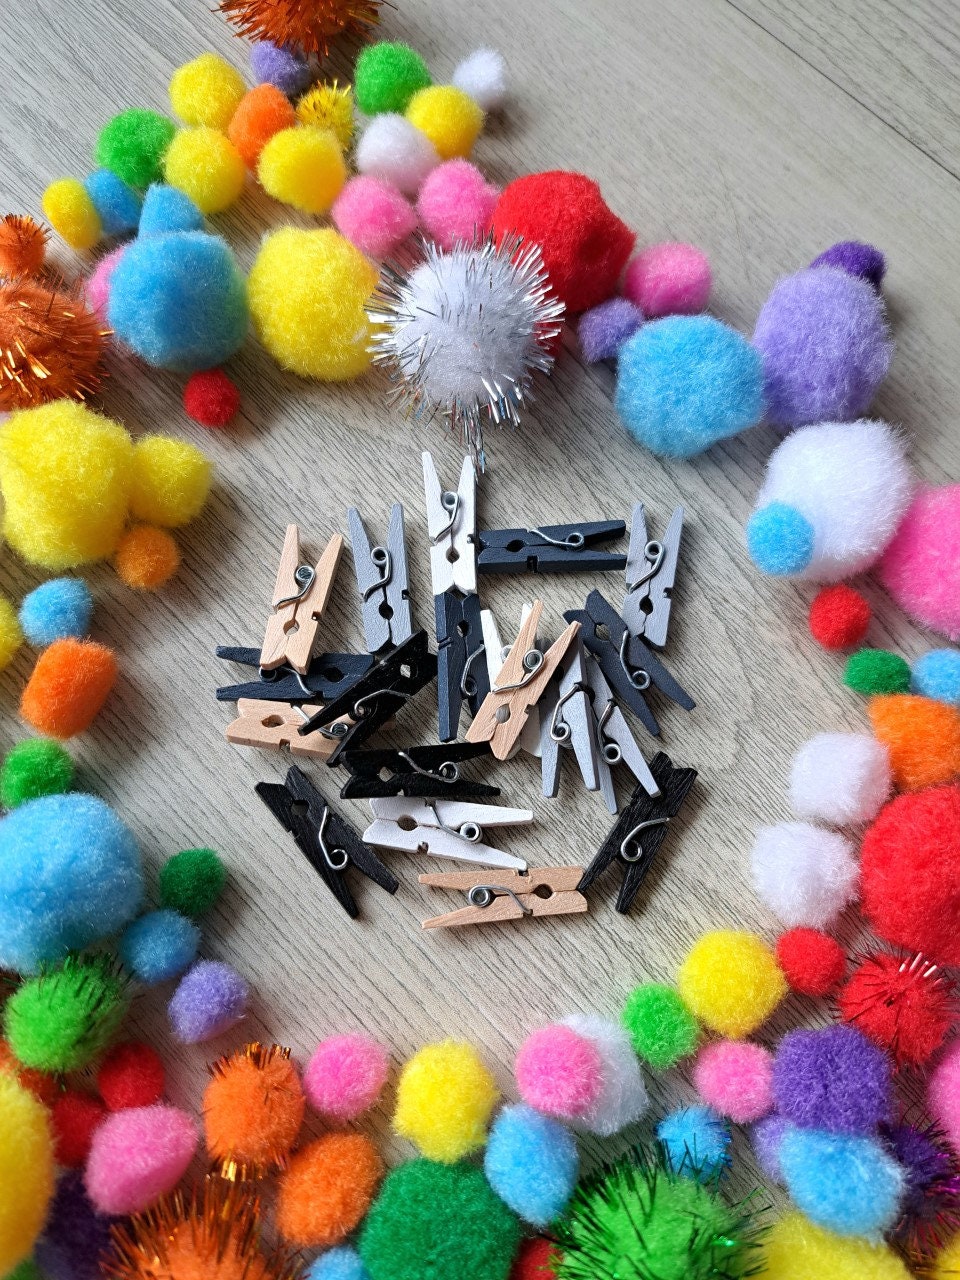 Tiny Clothespins Small Clothes Pins Mini Clothespins, Natural Wood